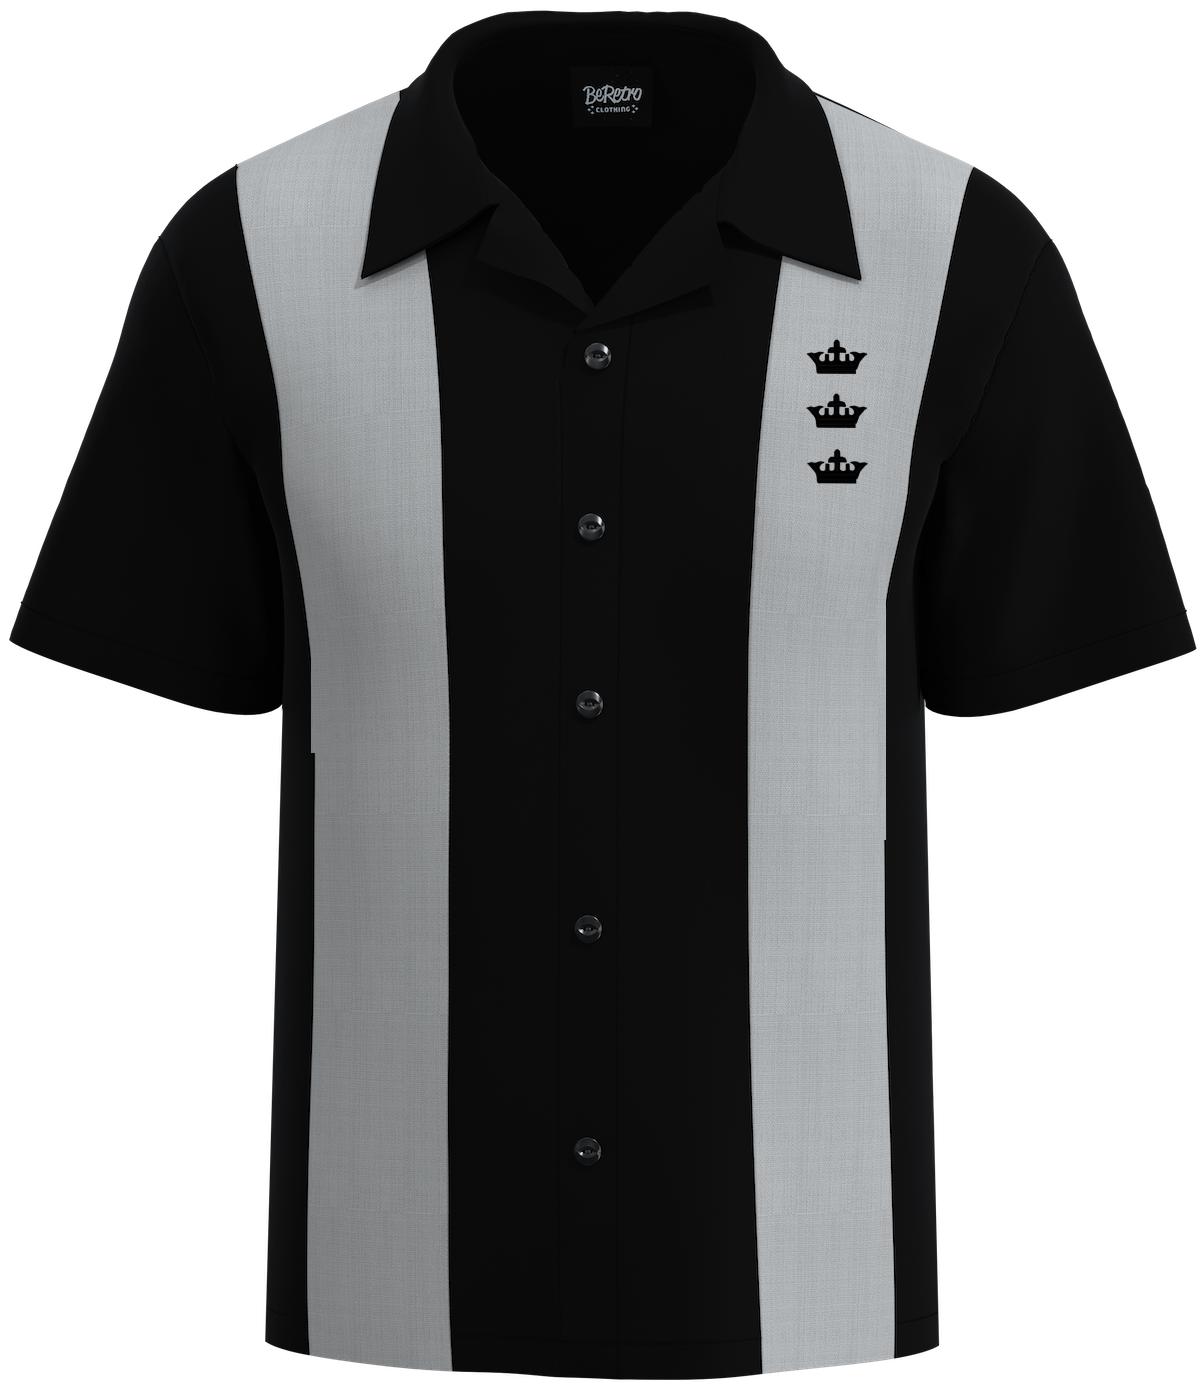 KingPin Bowling Shirt | Retro Bowling Team Shirts